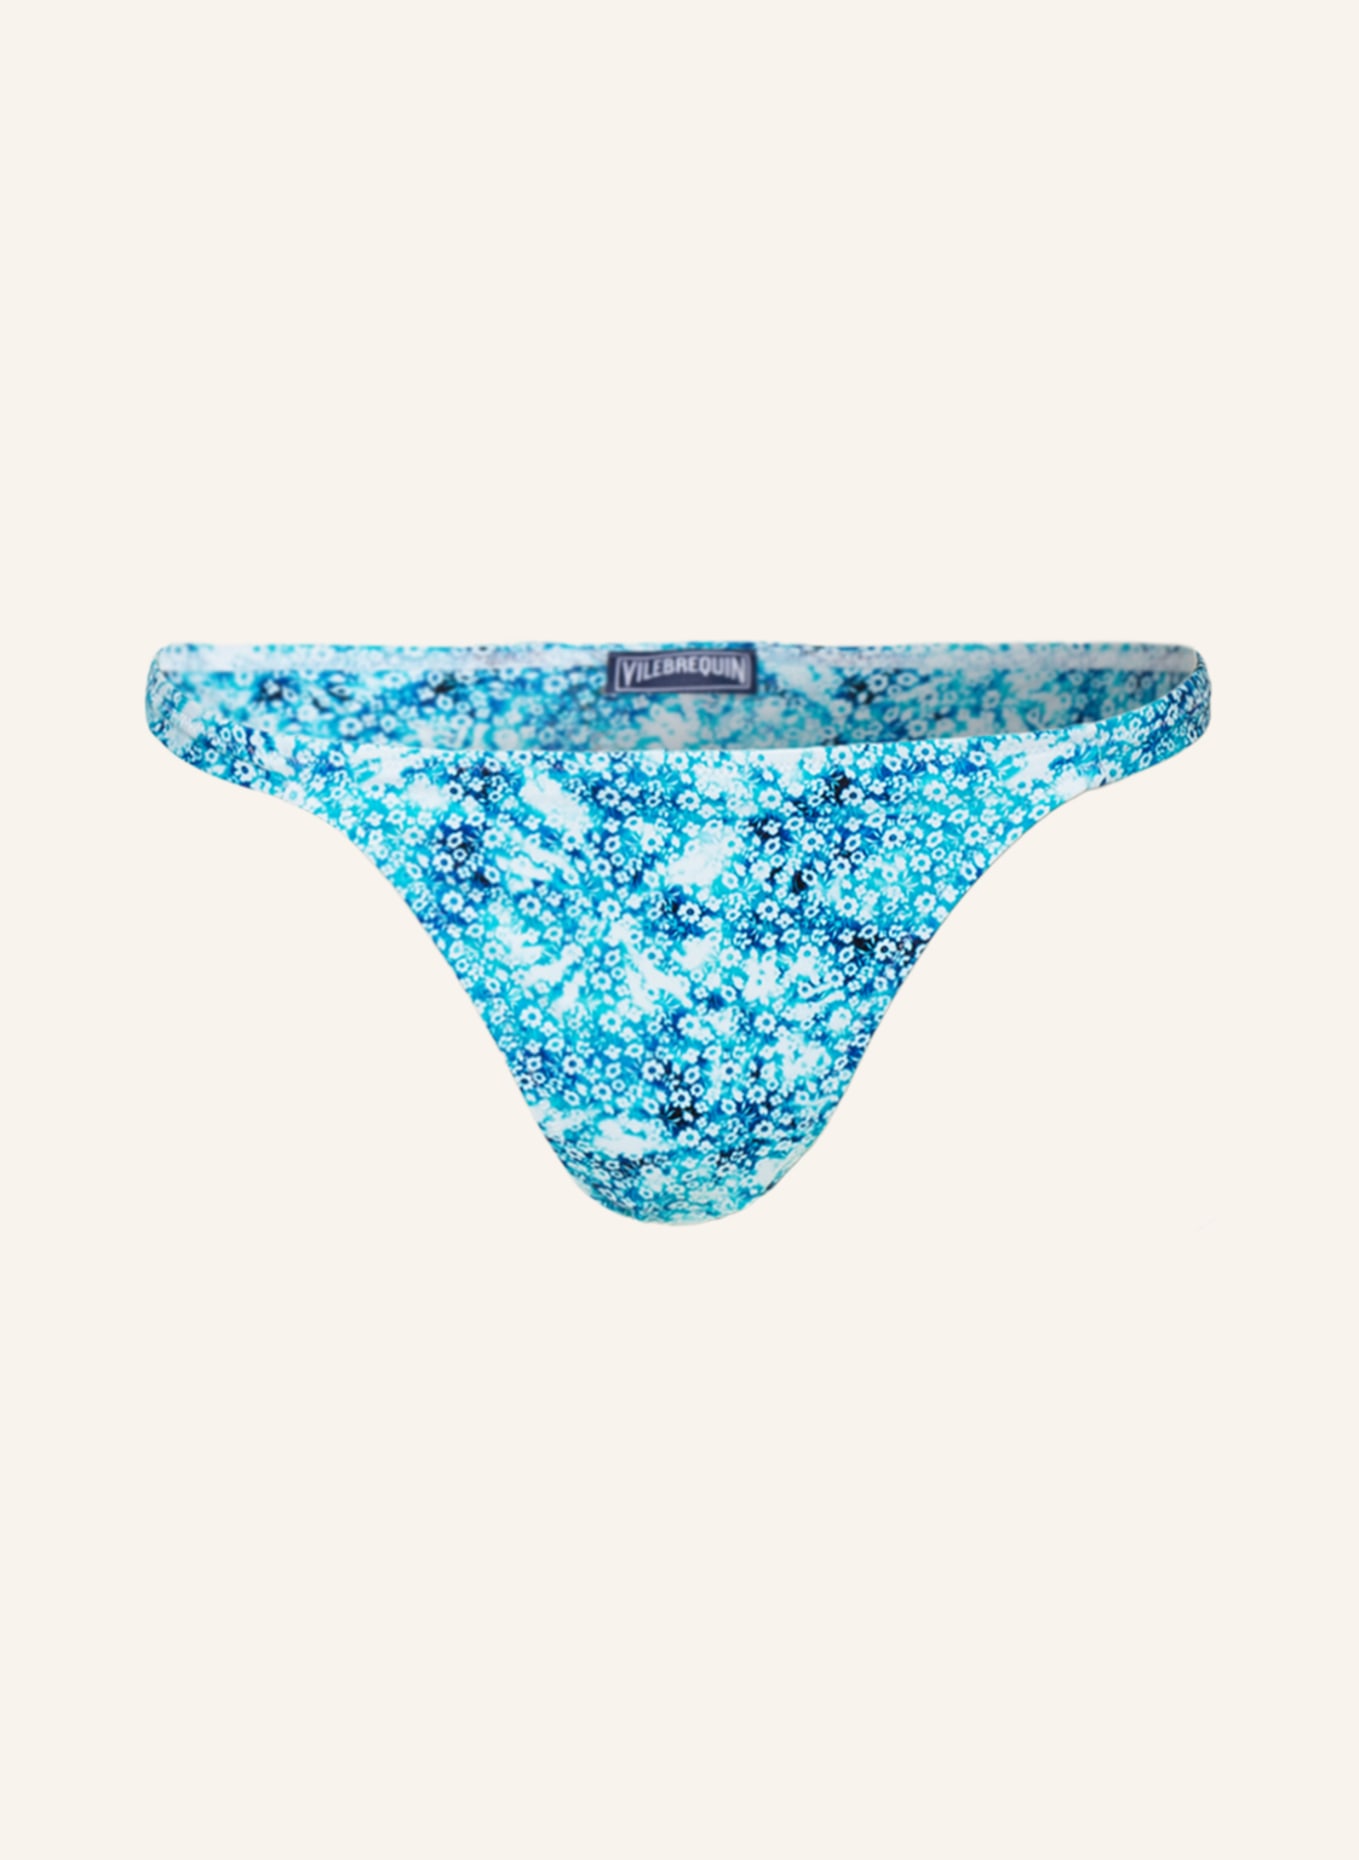 VILEBREQUIN Bralette-Bikini-Top FLOWERS TIE & DIE FRAZ, Farbe: TÜRKIS/ WEISS/ BLAU (Bild 1)